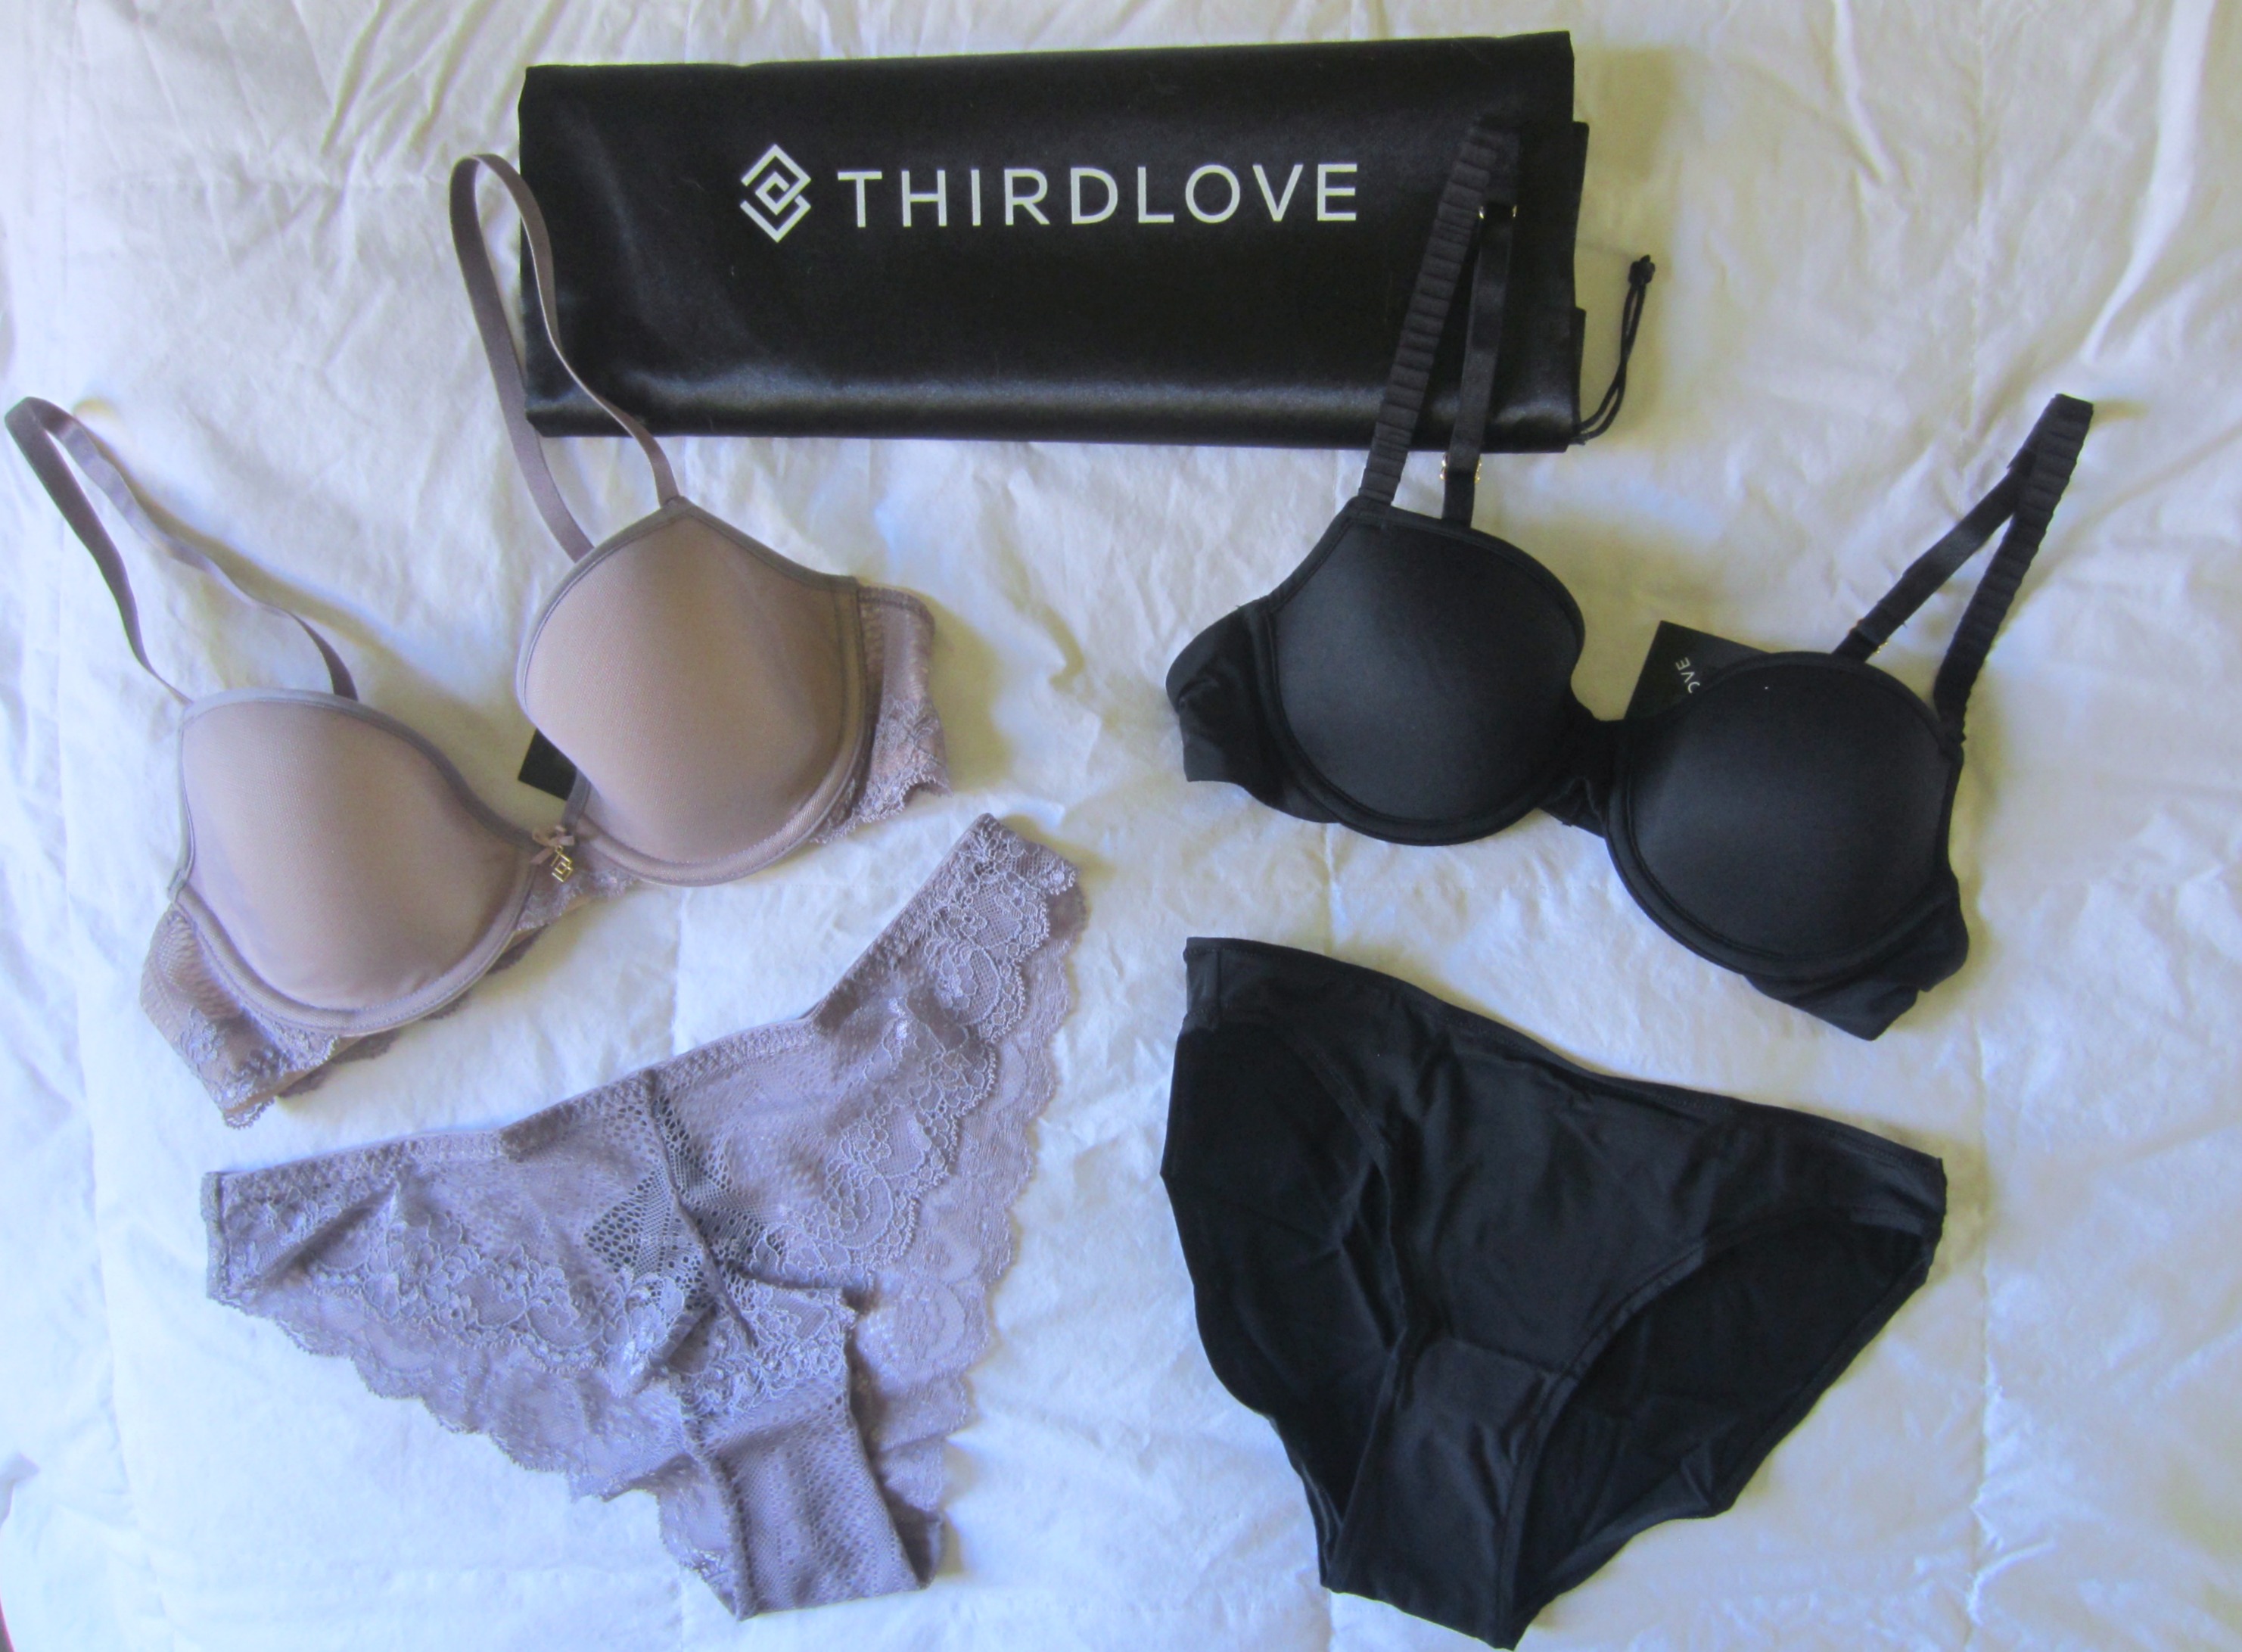 third love lingerie